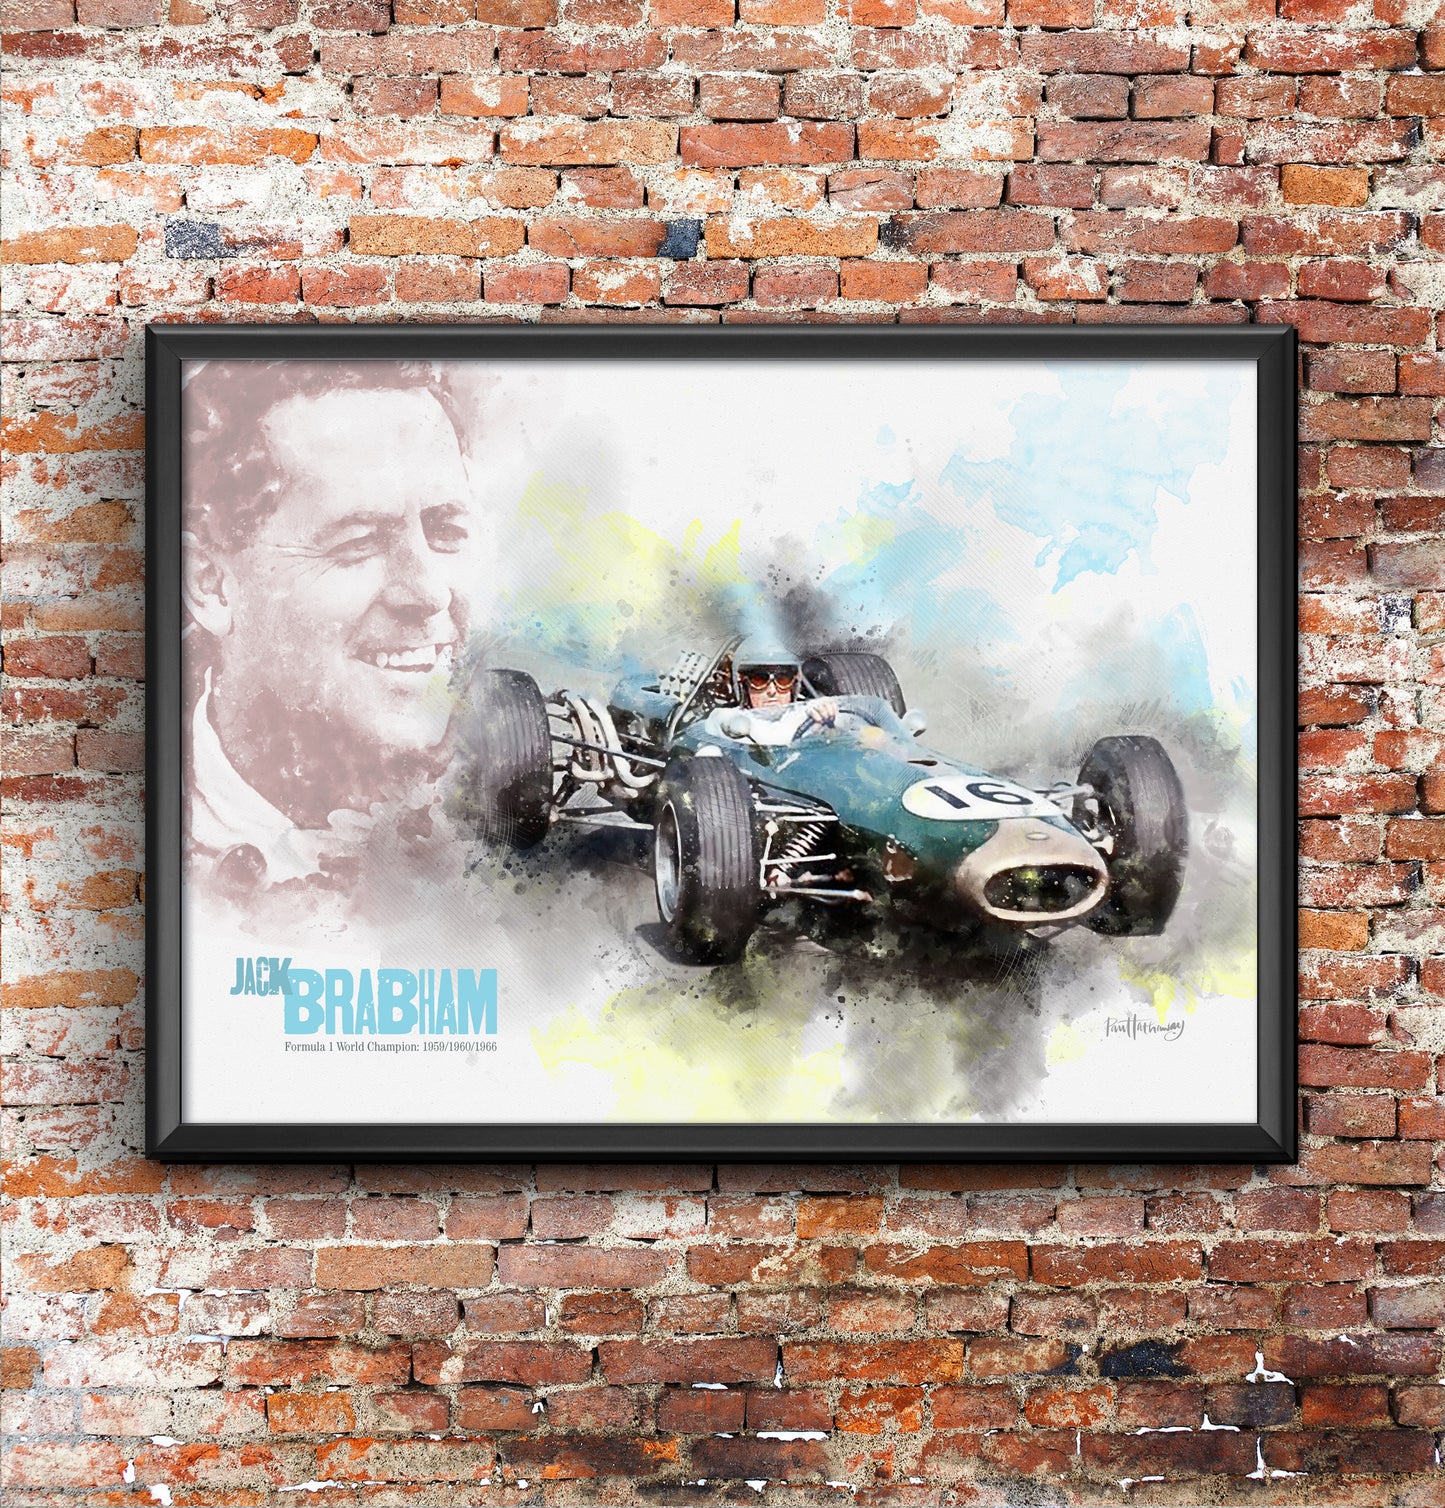 Jack Brabham - Motor Racing Art Print